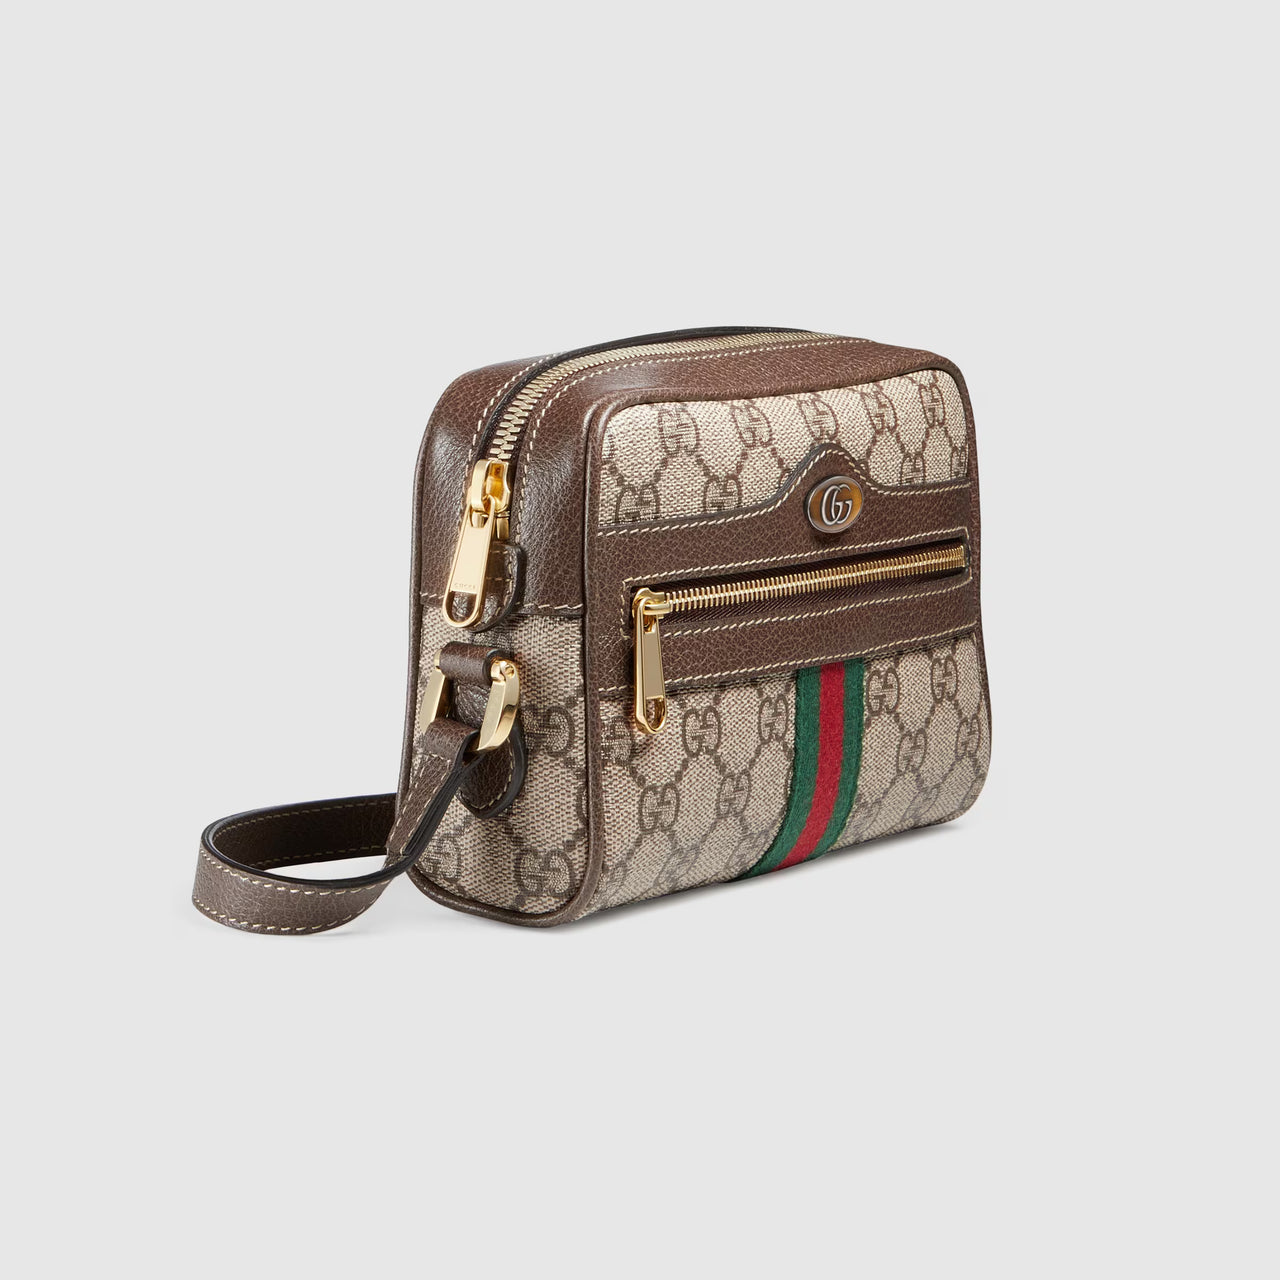 Gucci GG Ophidia GG Supreme Mini Bag (Beige & Ebony)